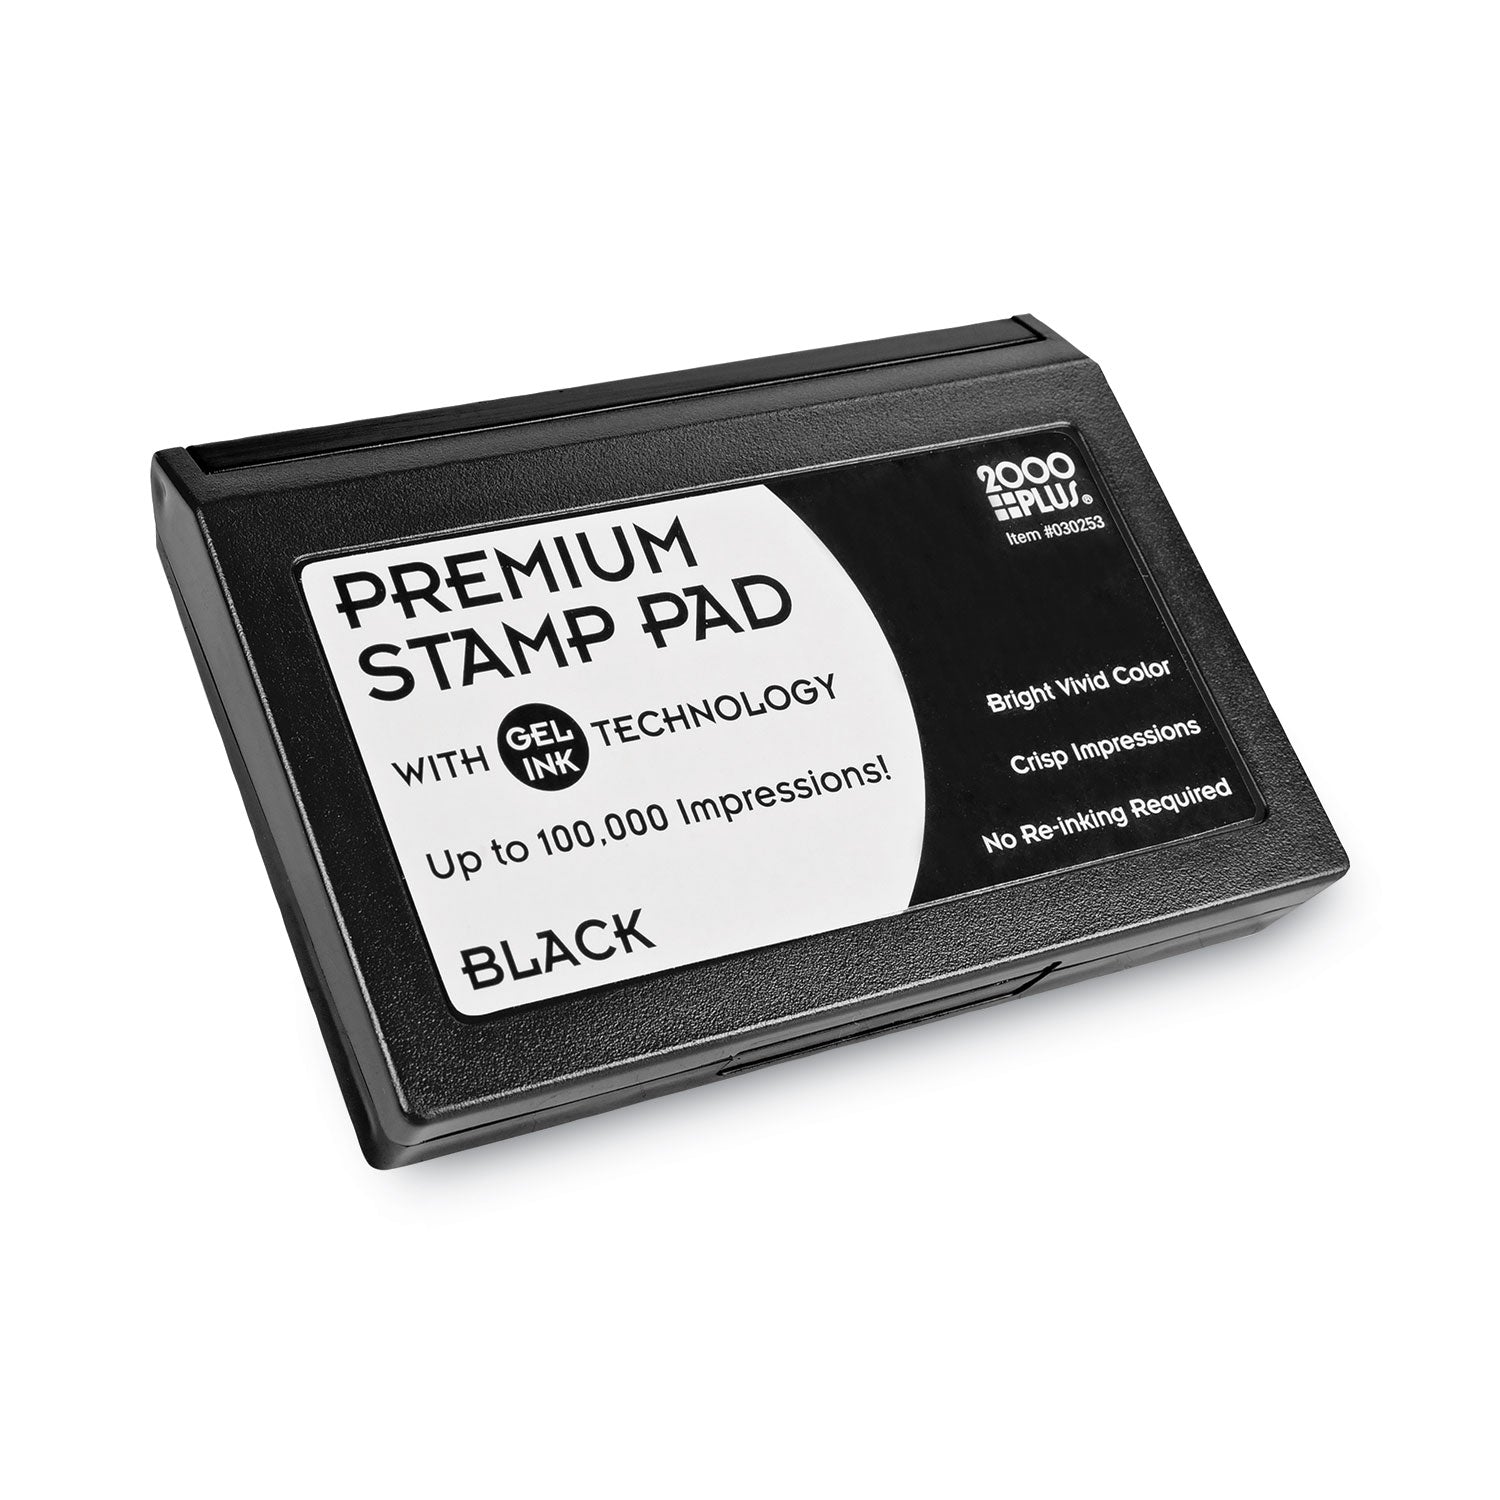 Microgel Stamp Pad for 2000 PLUS, 4.25" x 2.75", Black - 